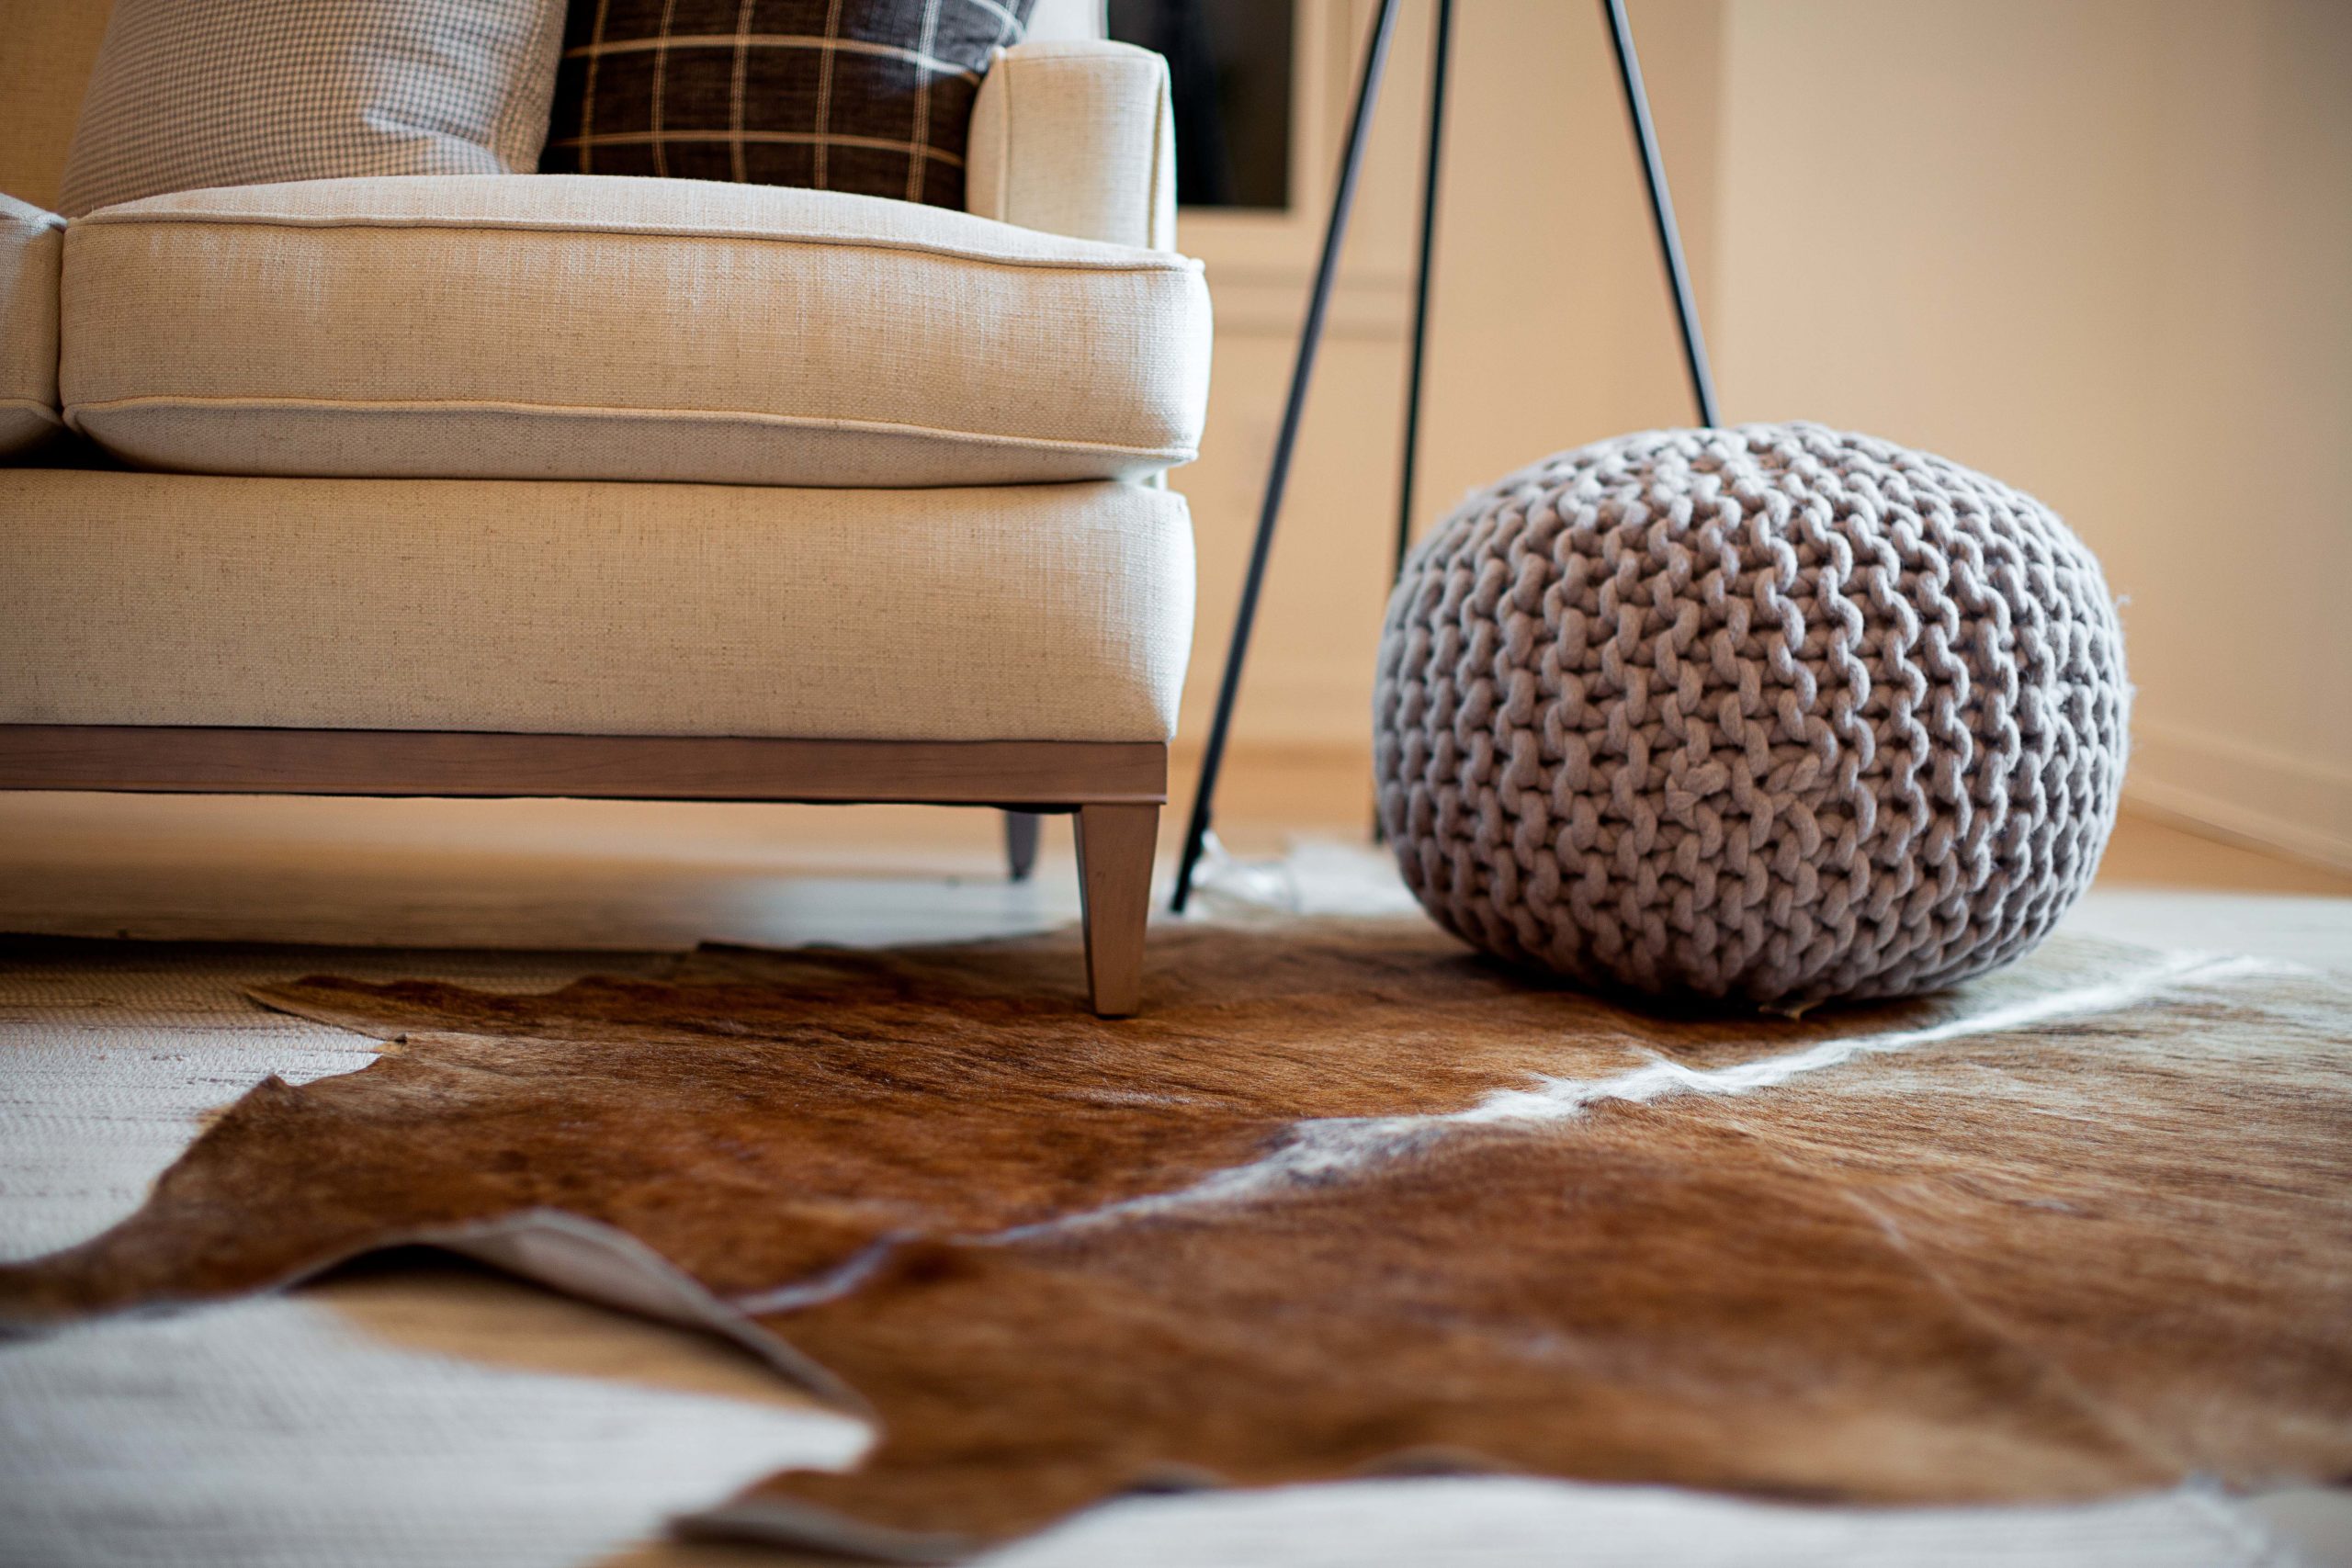 A cowhide rug in a living room.